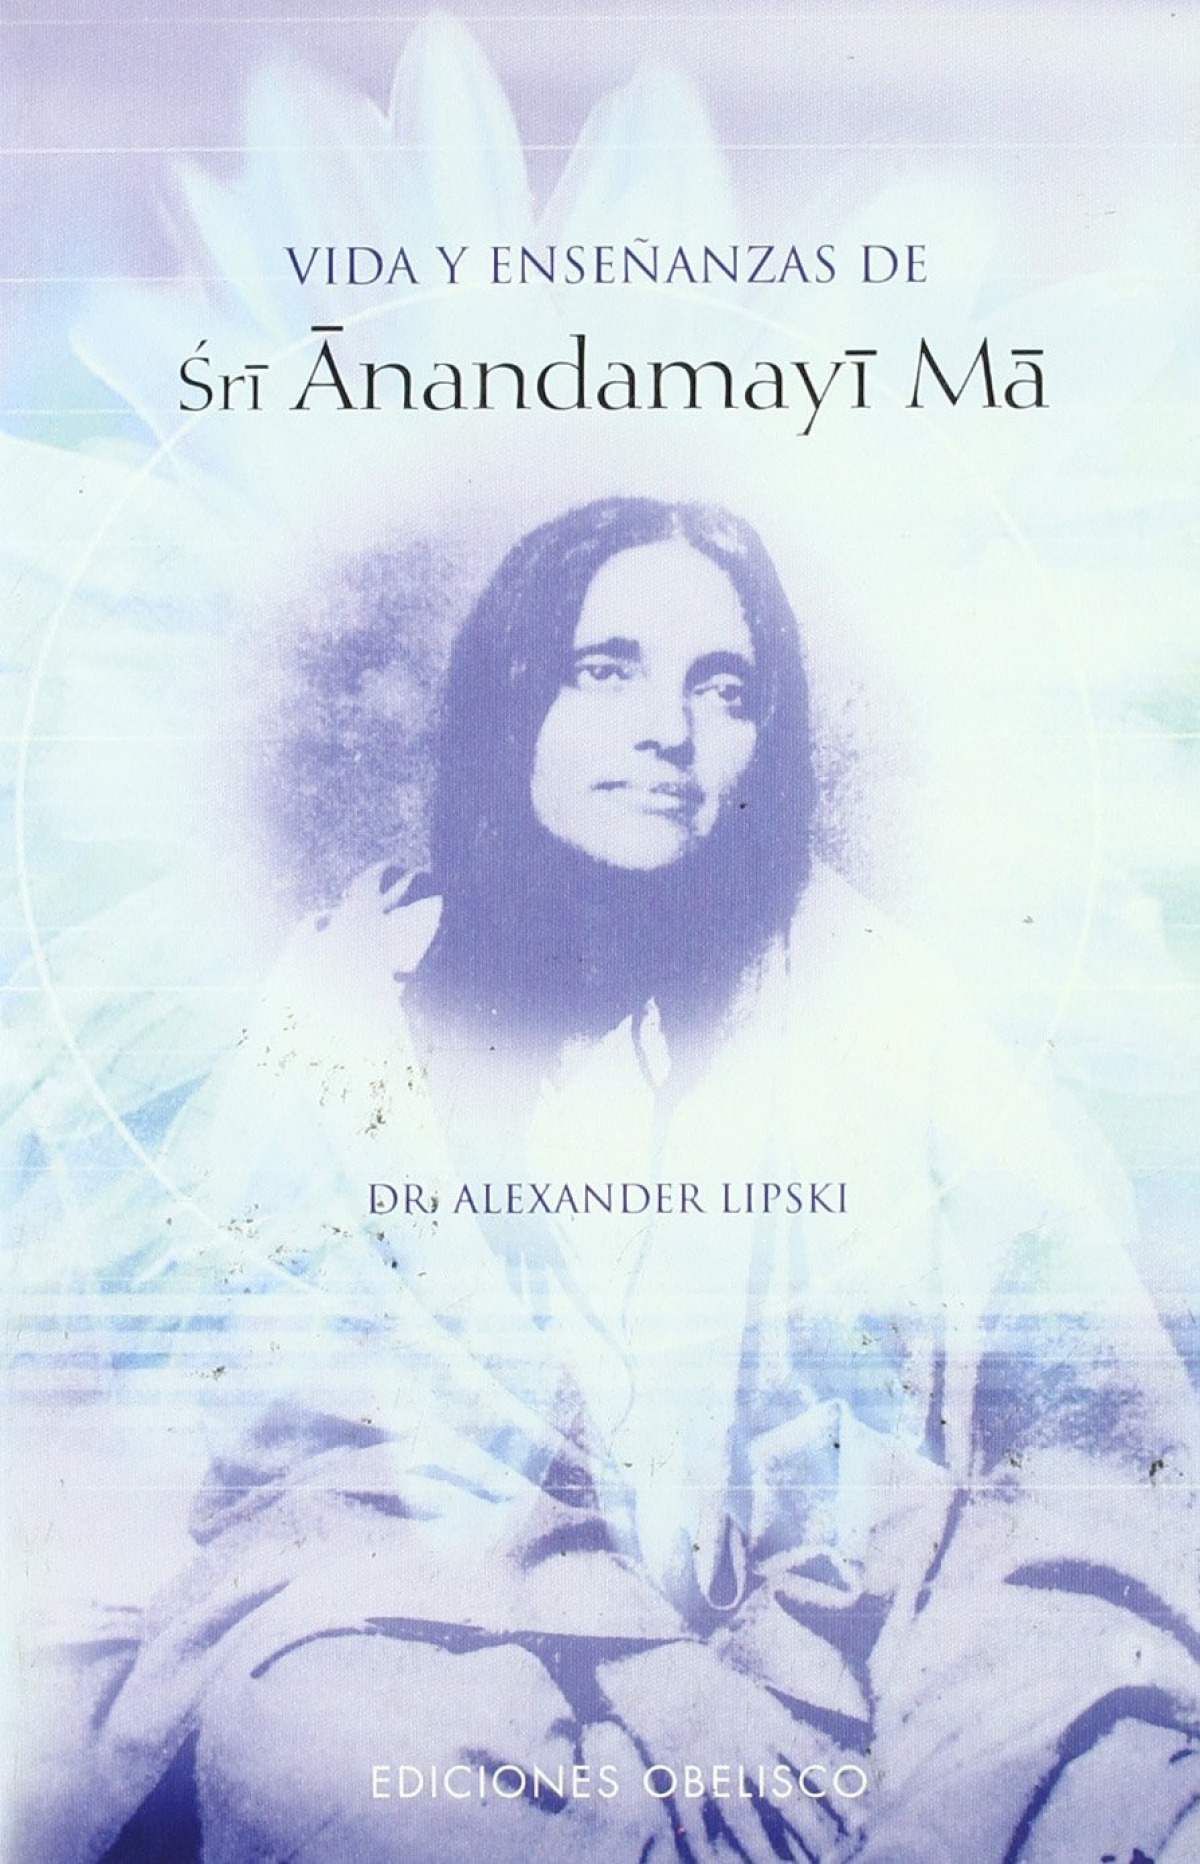 Vida y enseñanza de sri anandamayi ma - Lipski, Alexander